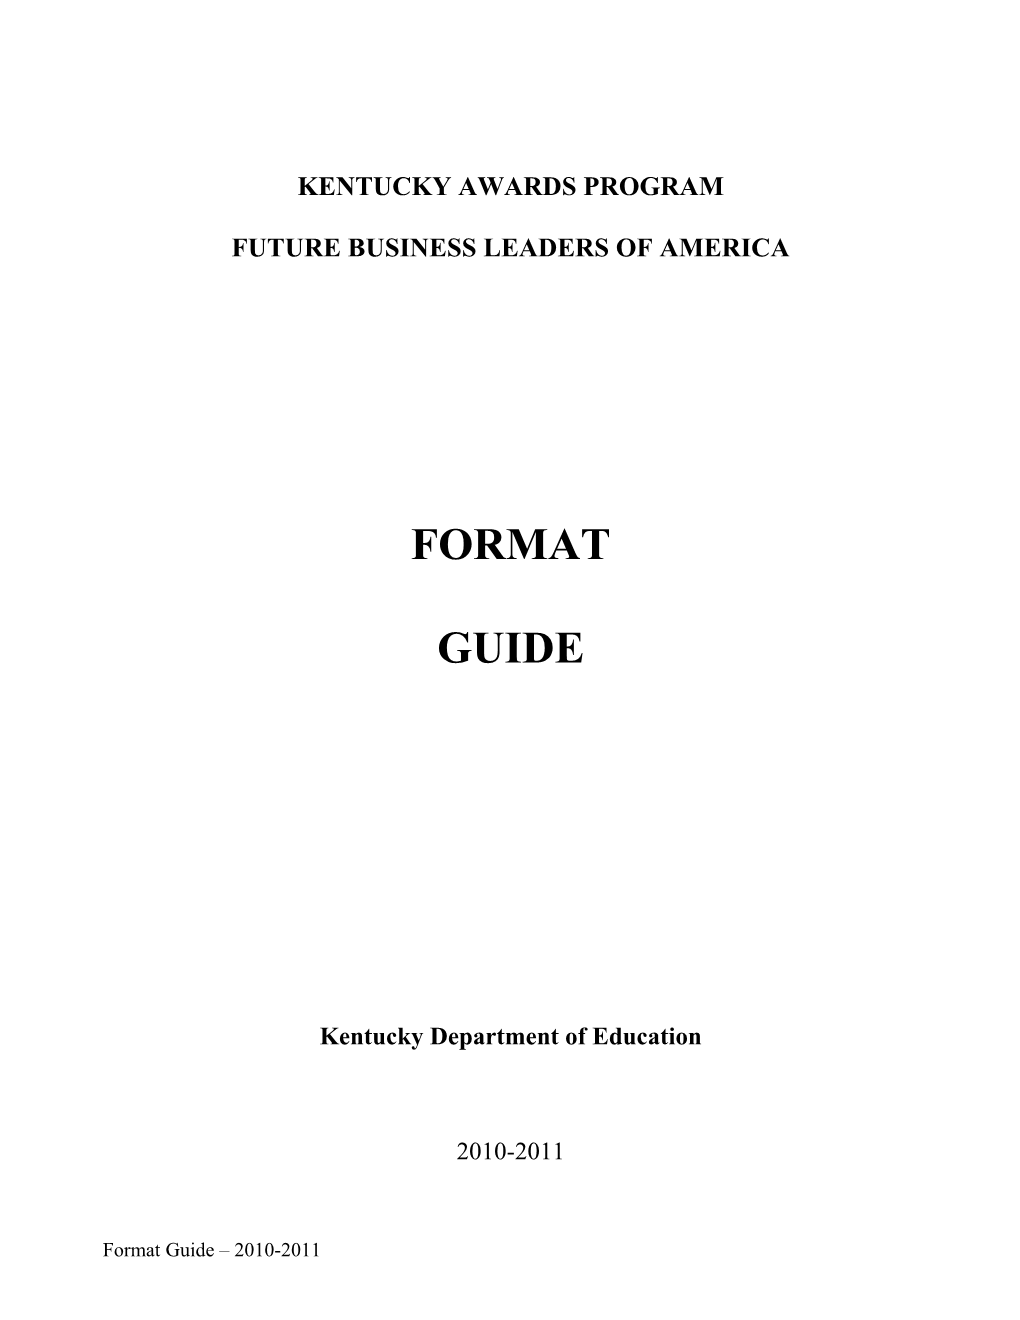 Fbla-Pbl Format Guide